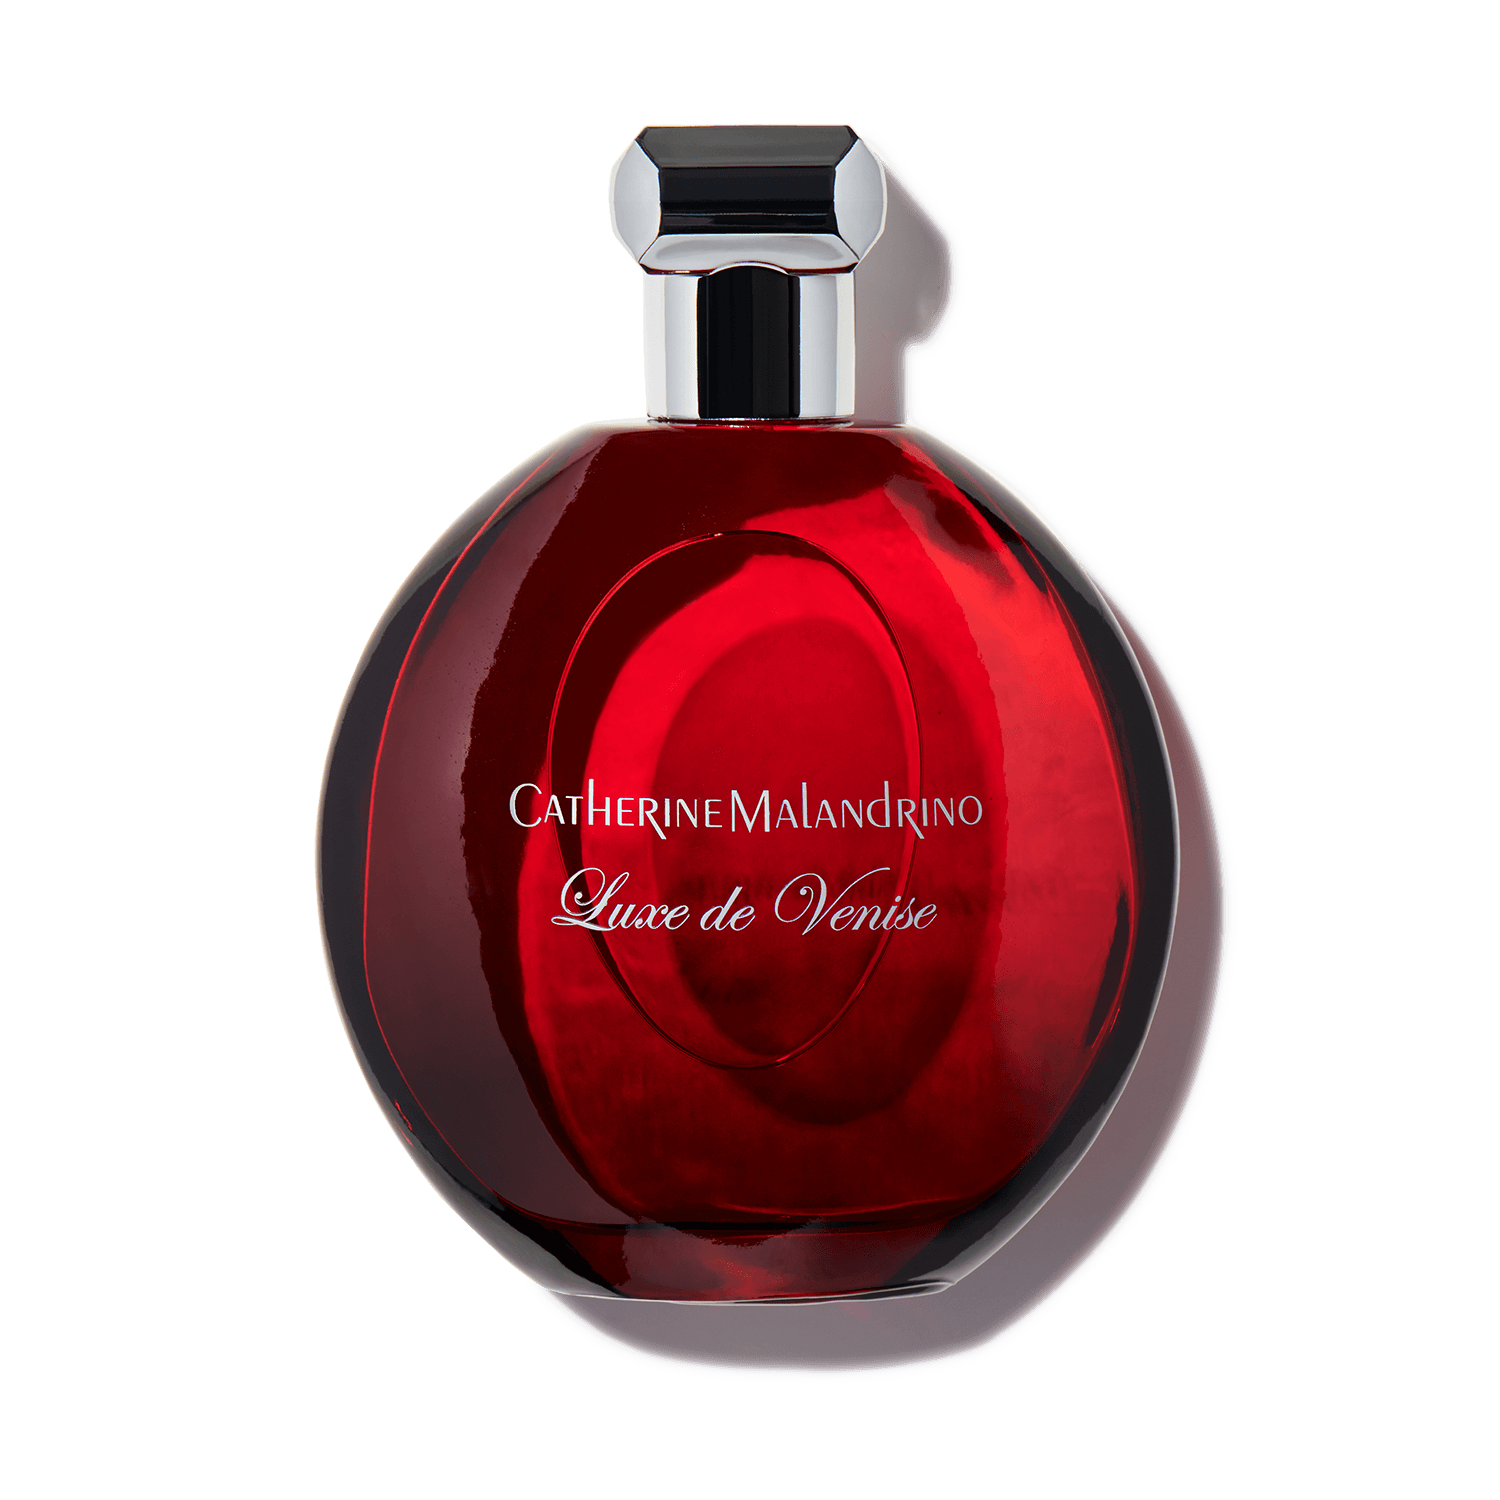 Catherine Malandrino Catherine Malandrino Dream 3.4oz Eau de Parfum, 3.4  fl. oz.